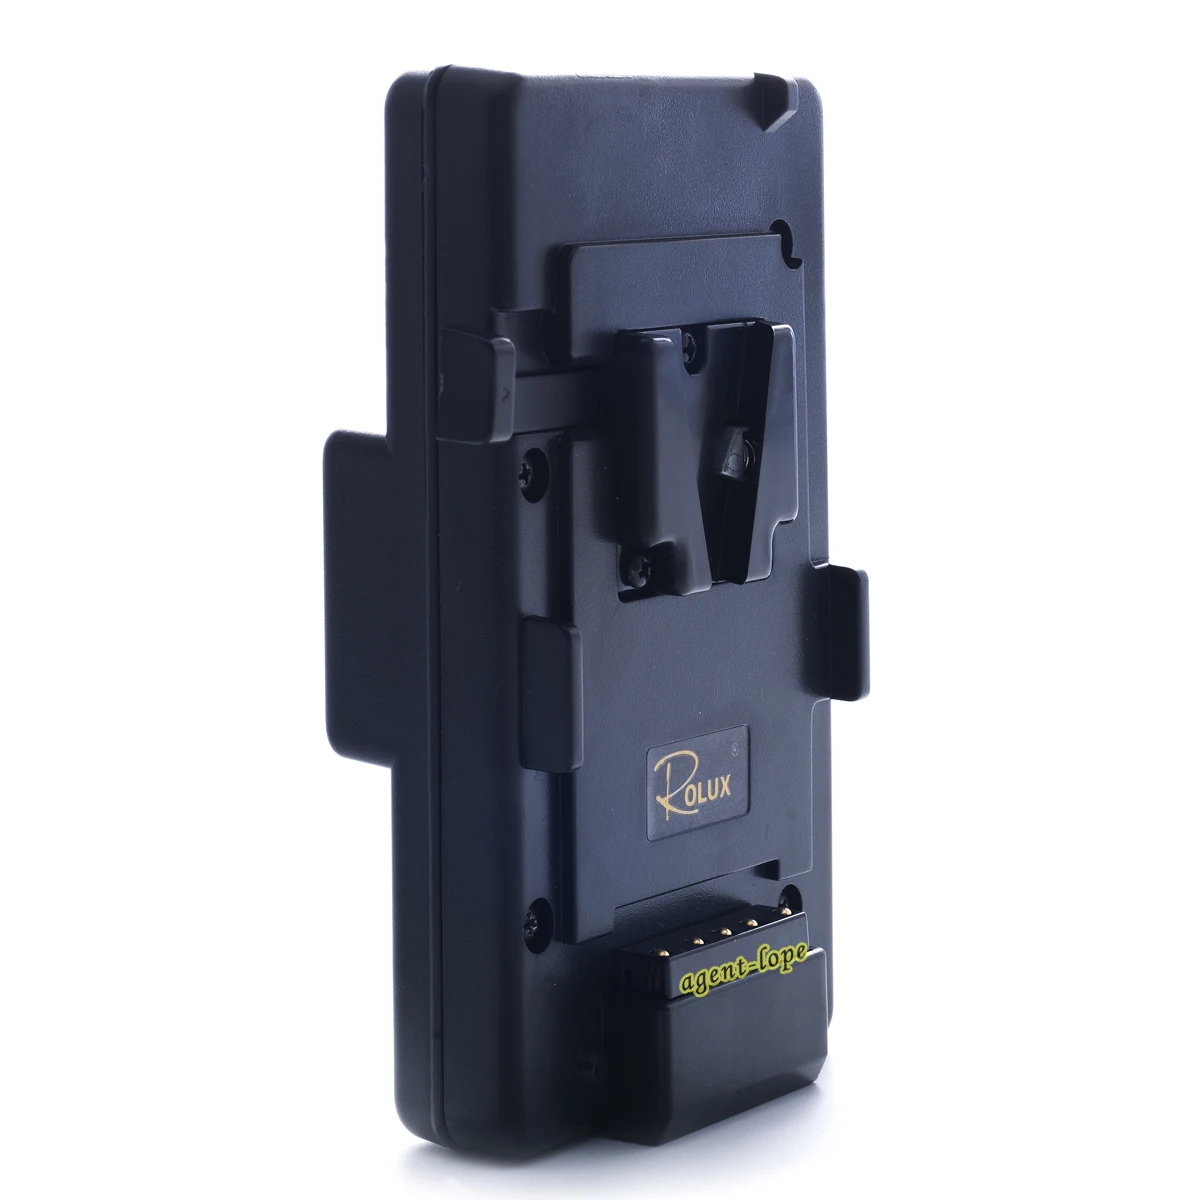 Anton Bauer Gold Mount To V-mount адаптер конвертер питания пластина для V mount батареи